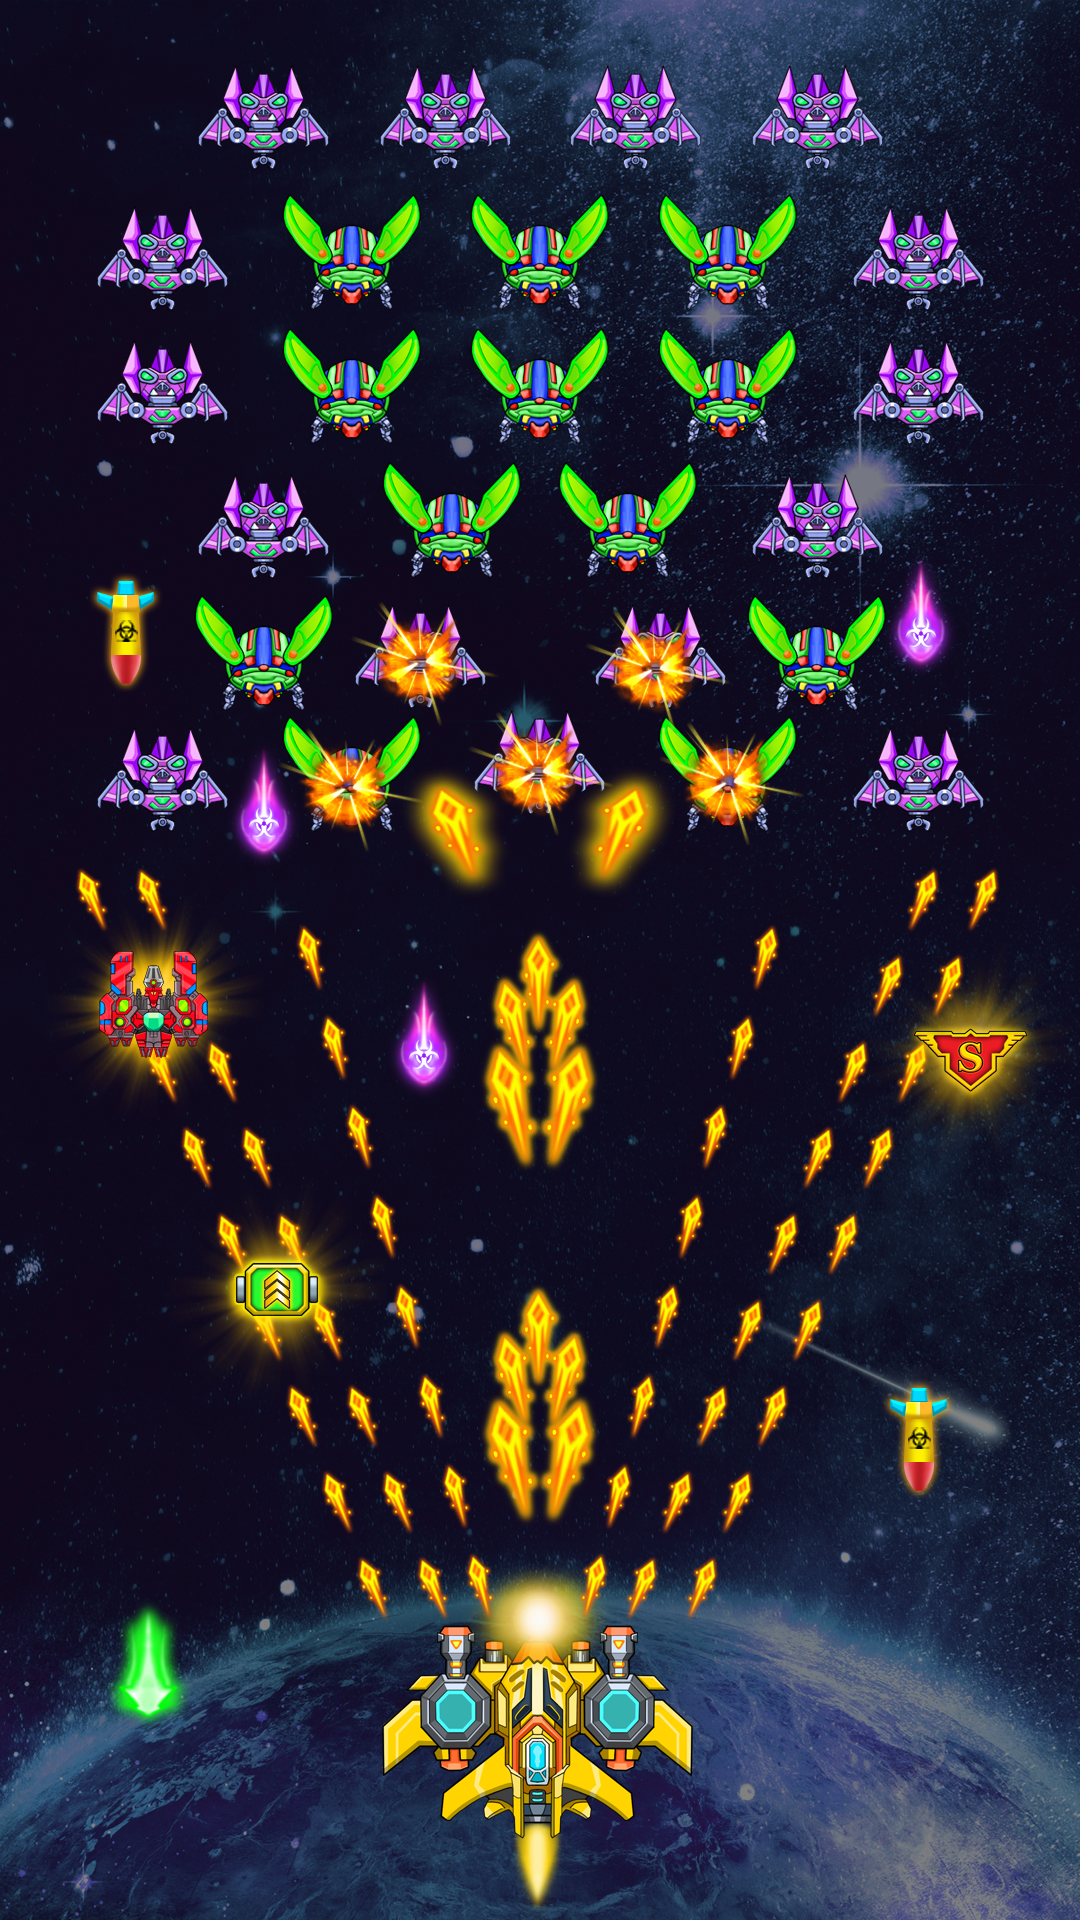 Screenshot 1 of Attacco galattico: battaglia spaziale 1.0.7